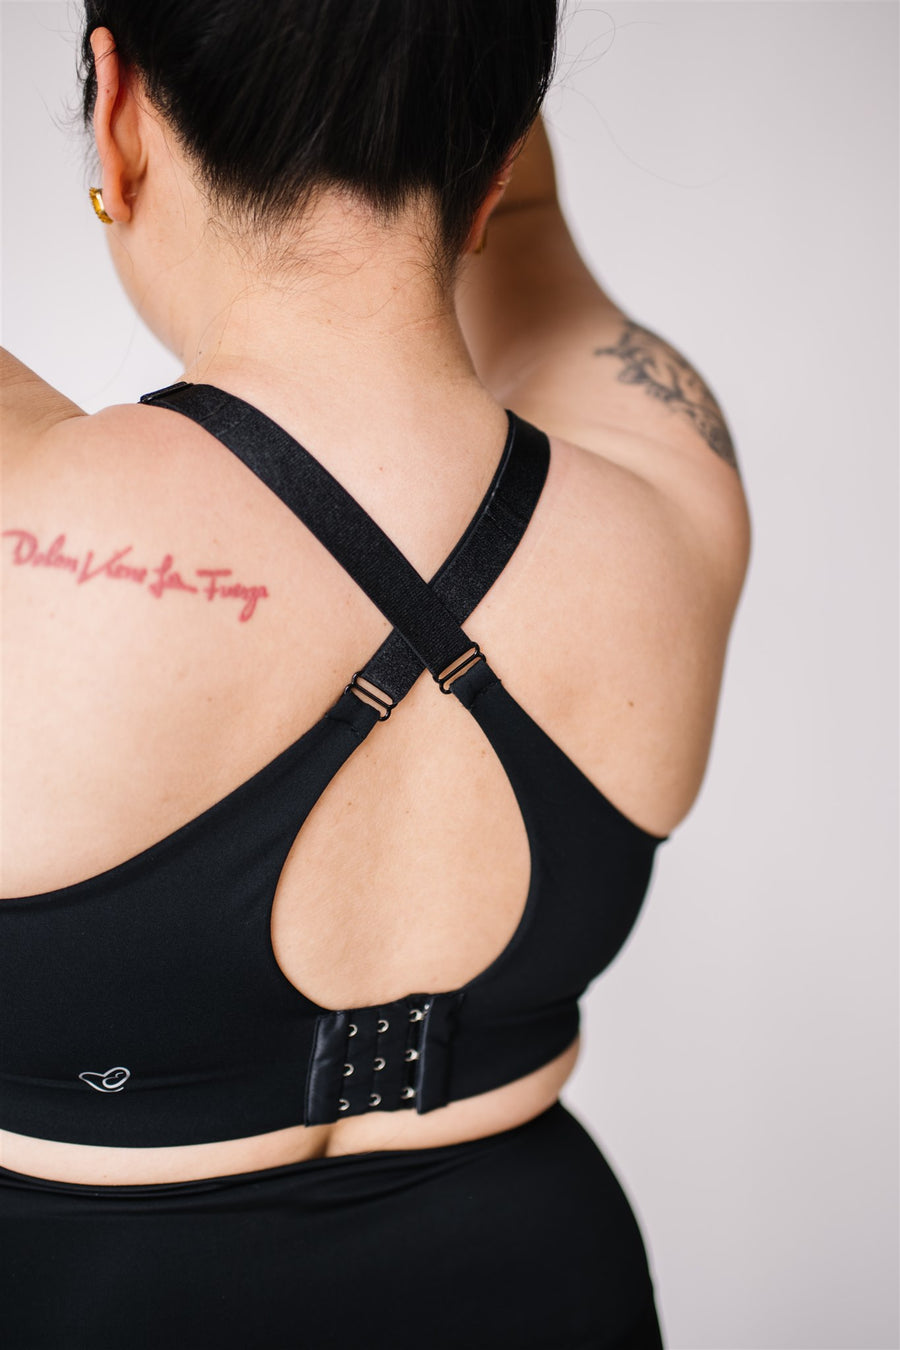 Woman showing criss cross back of black front-zip nursing sports bra.